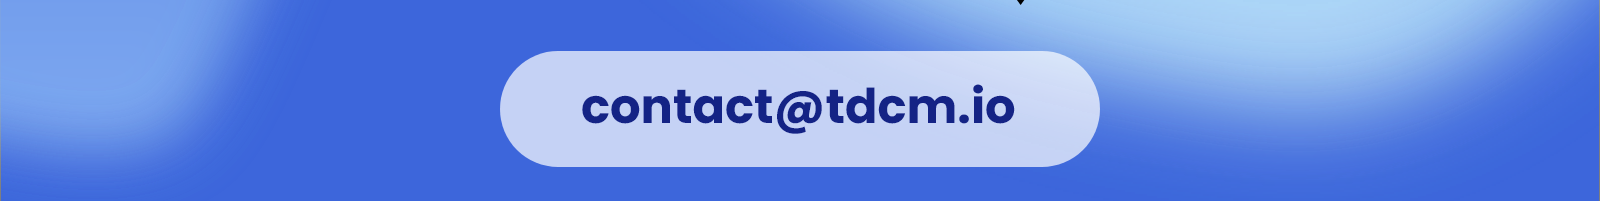 TDCM .io's profile banner